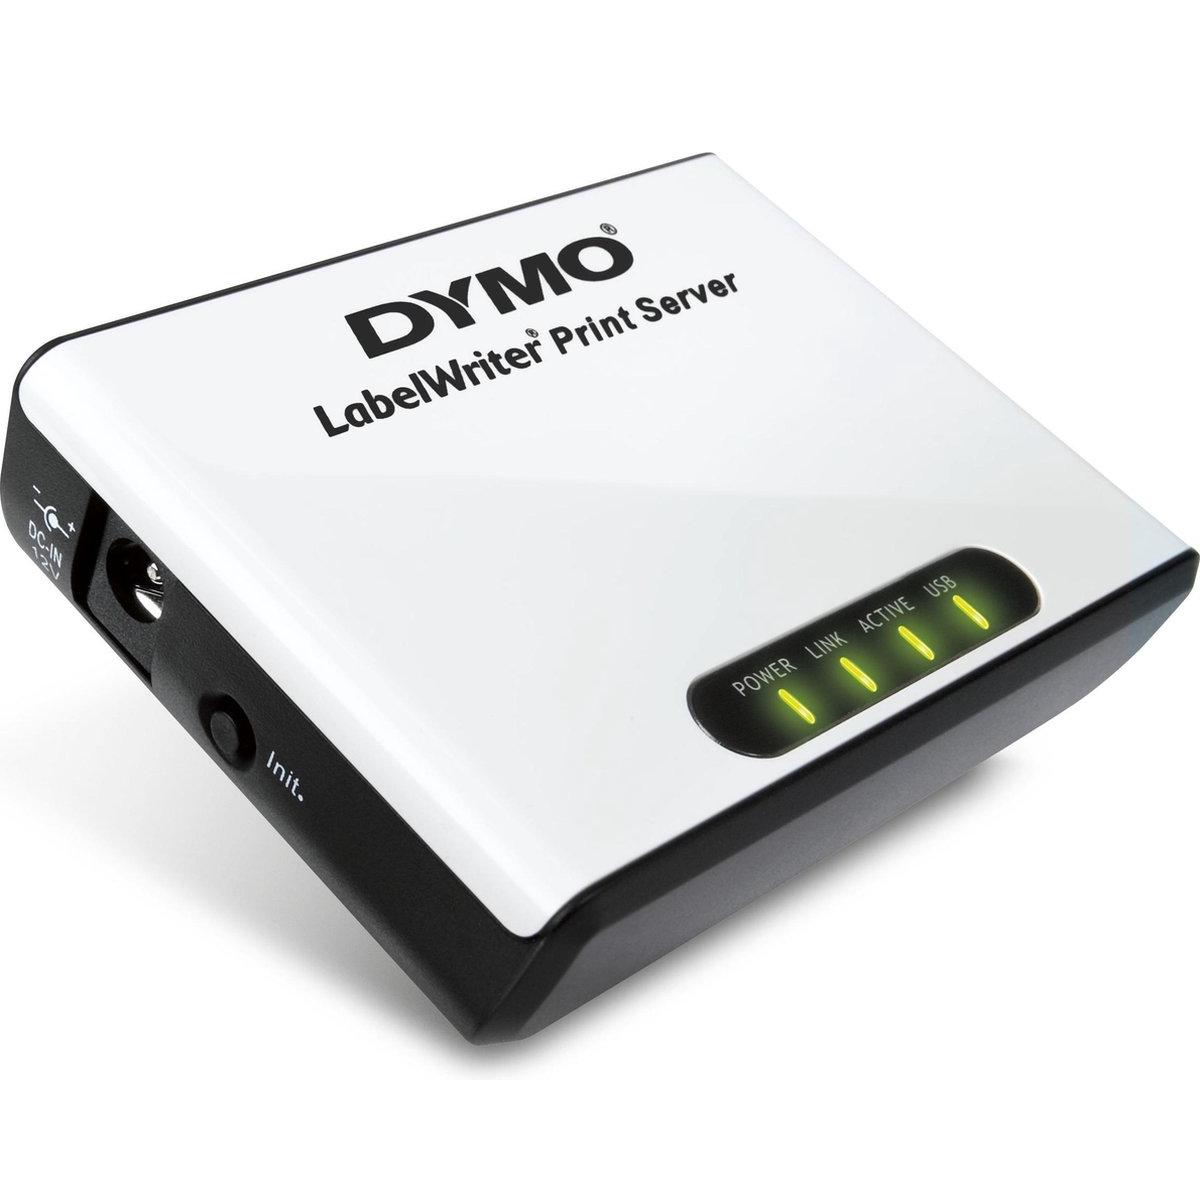 Netwerk printerserver - USB - Dymo